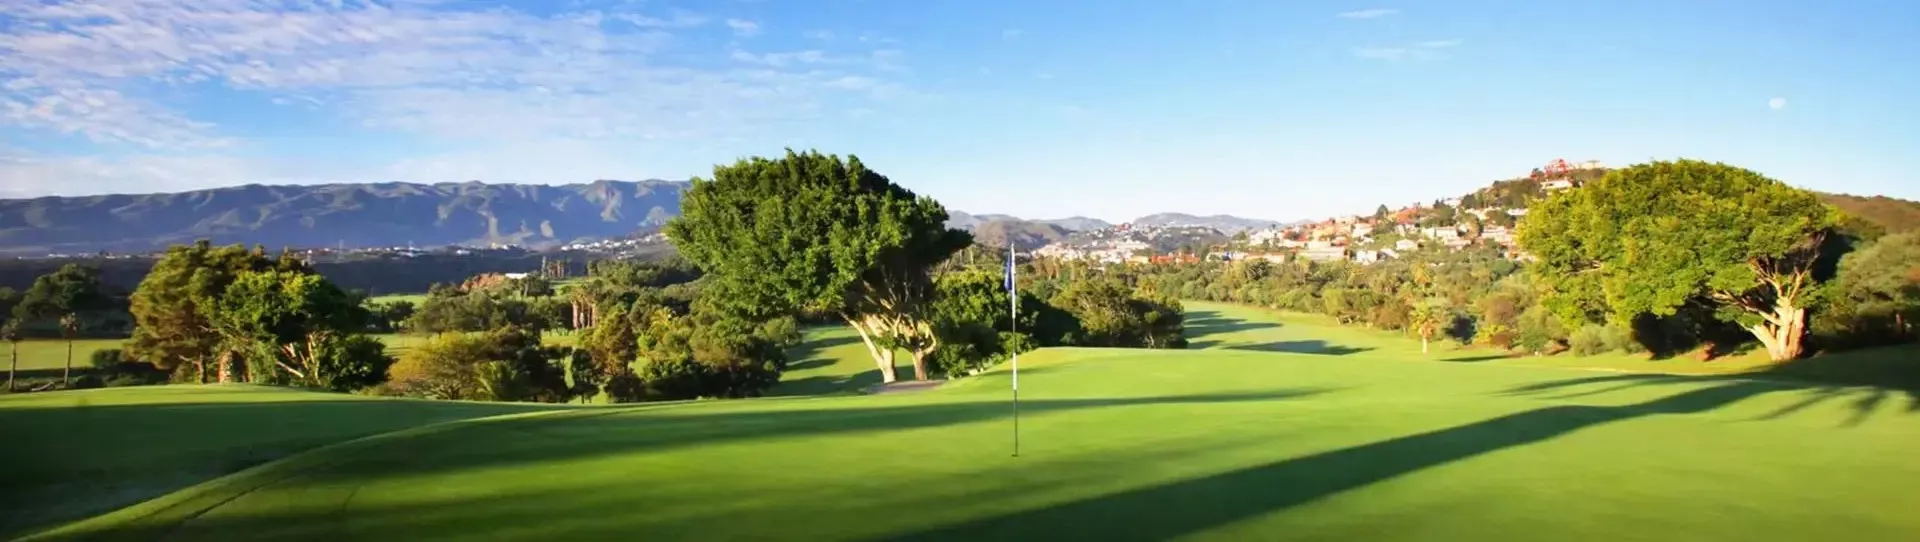 Spain golf courses - Real Club de Golf Las Palmas - Photo 2